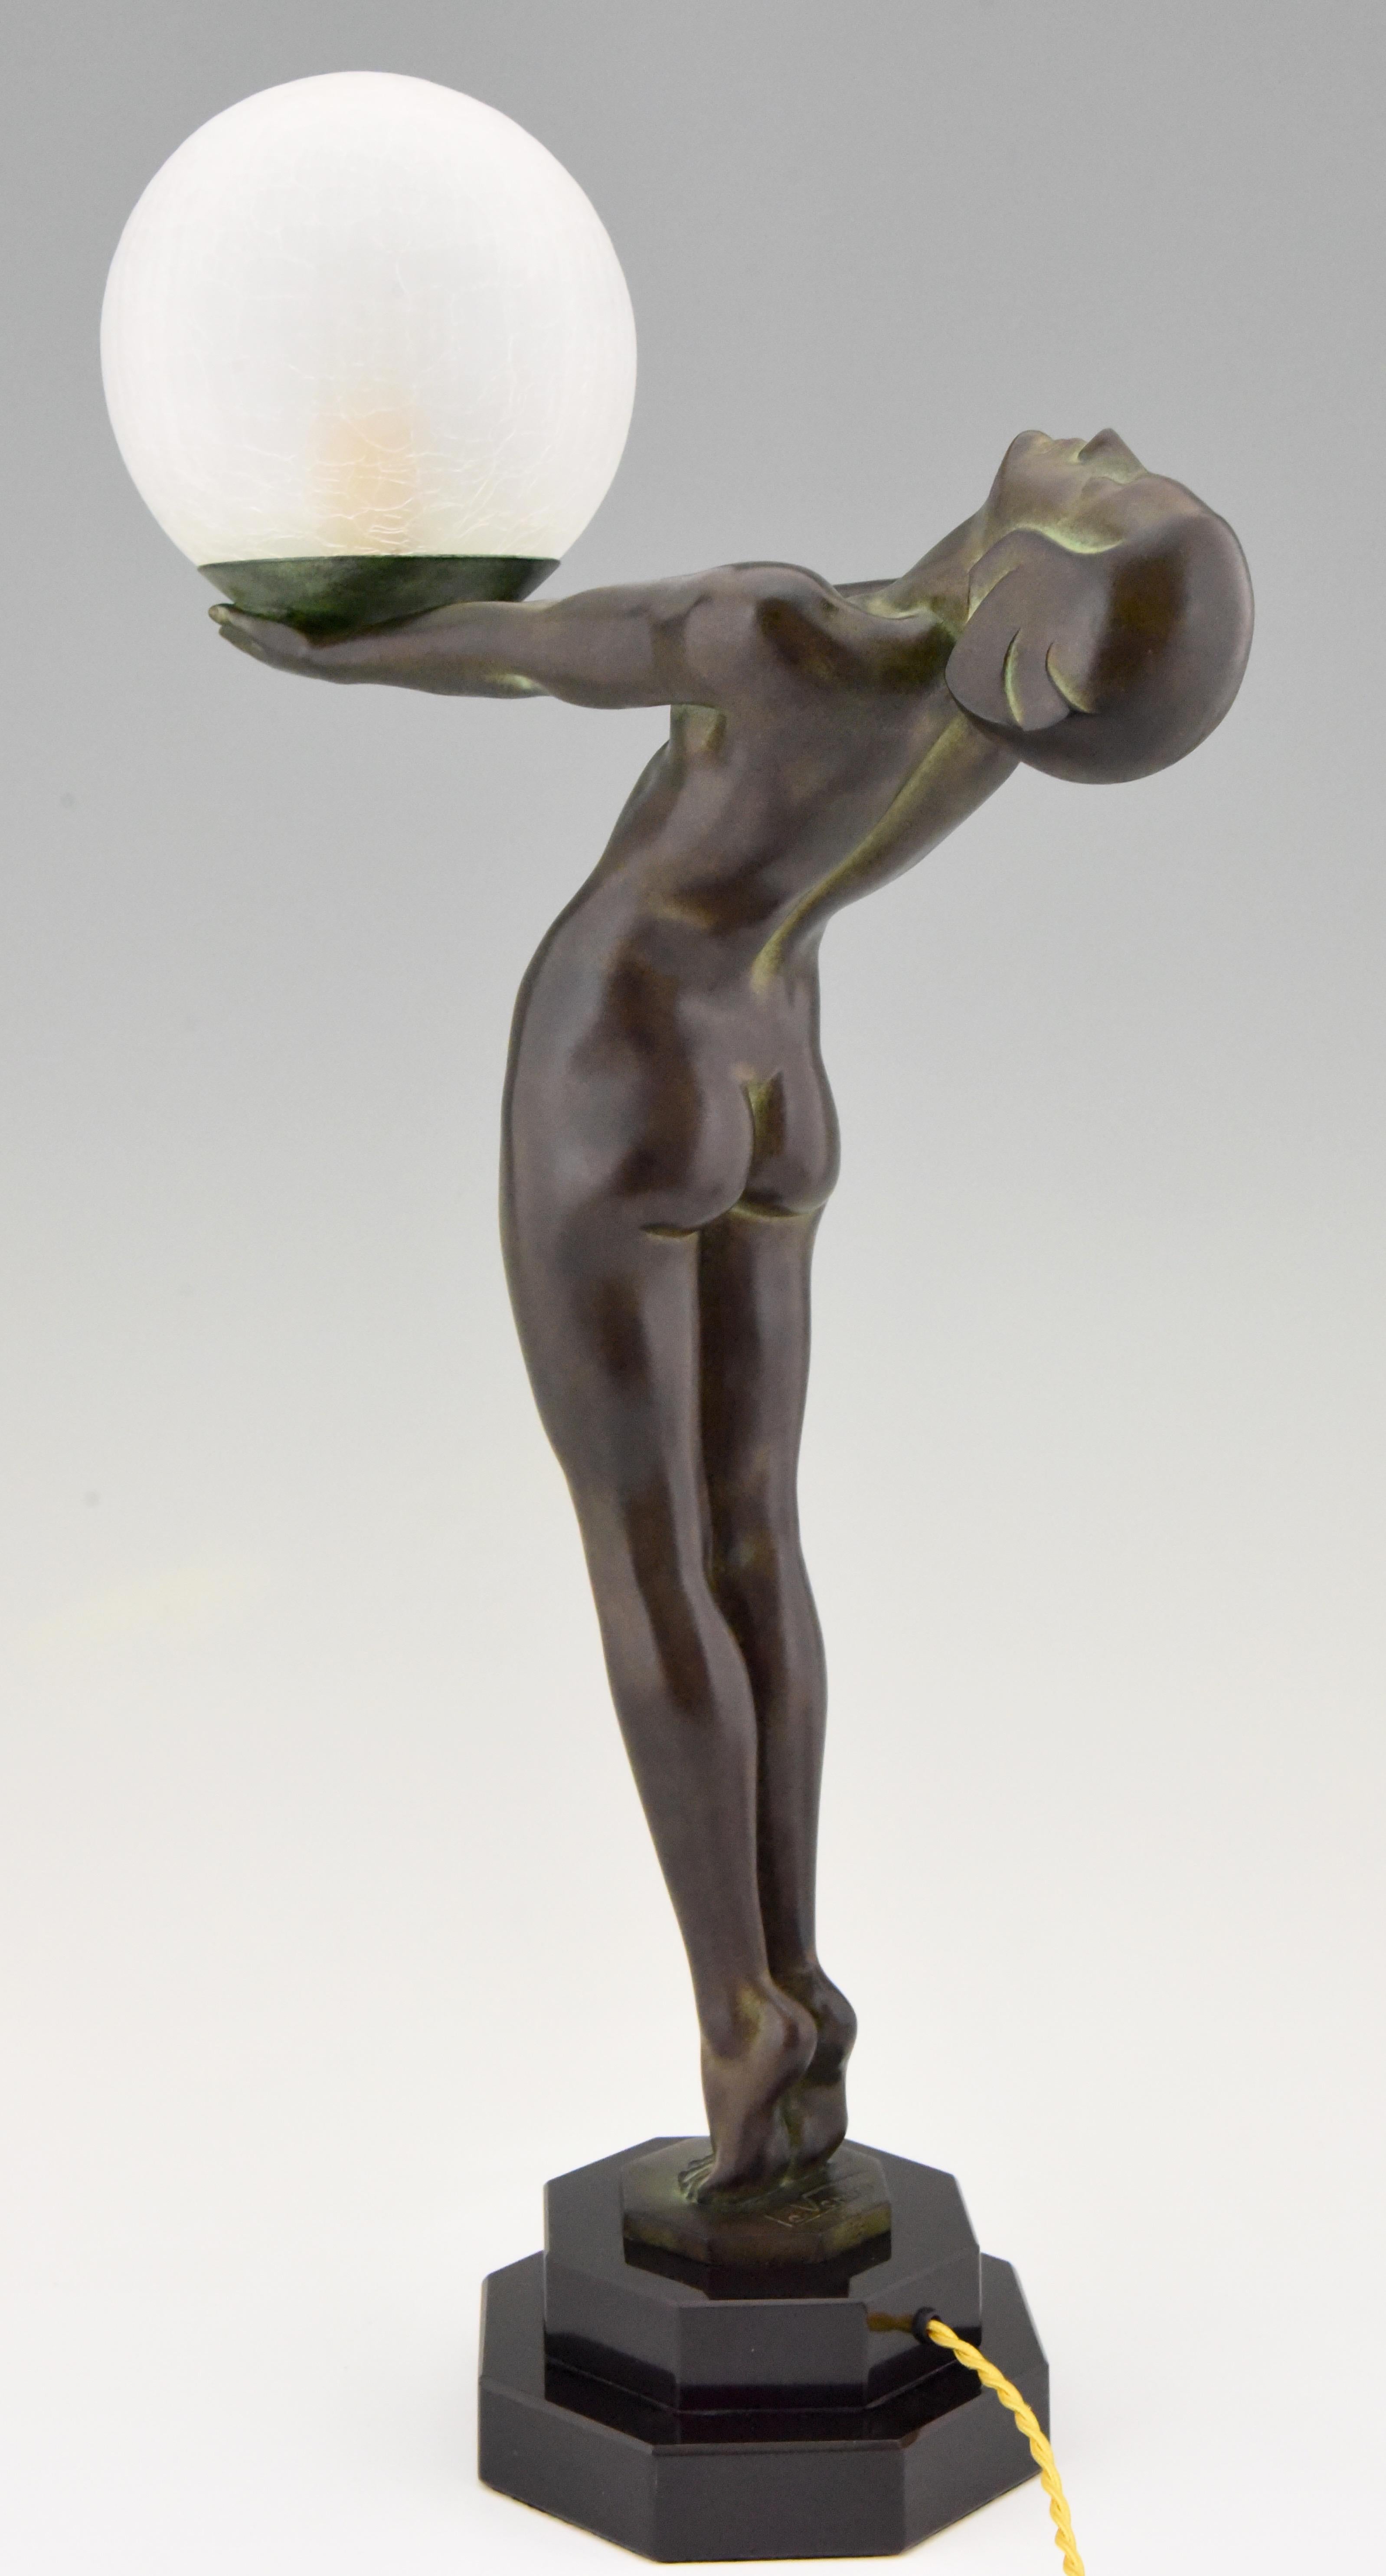 Art Deco Stil Lampe Clarté Stehender Akt Skulptur Max Le Verrier H 25 in, 64 cm (Zink)